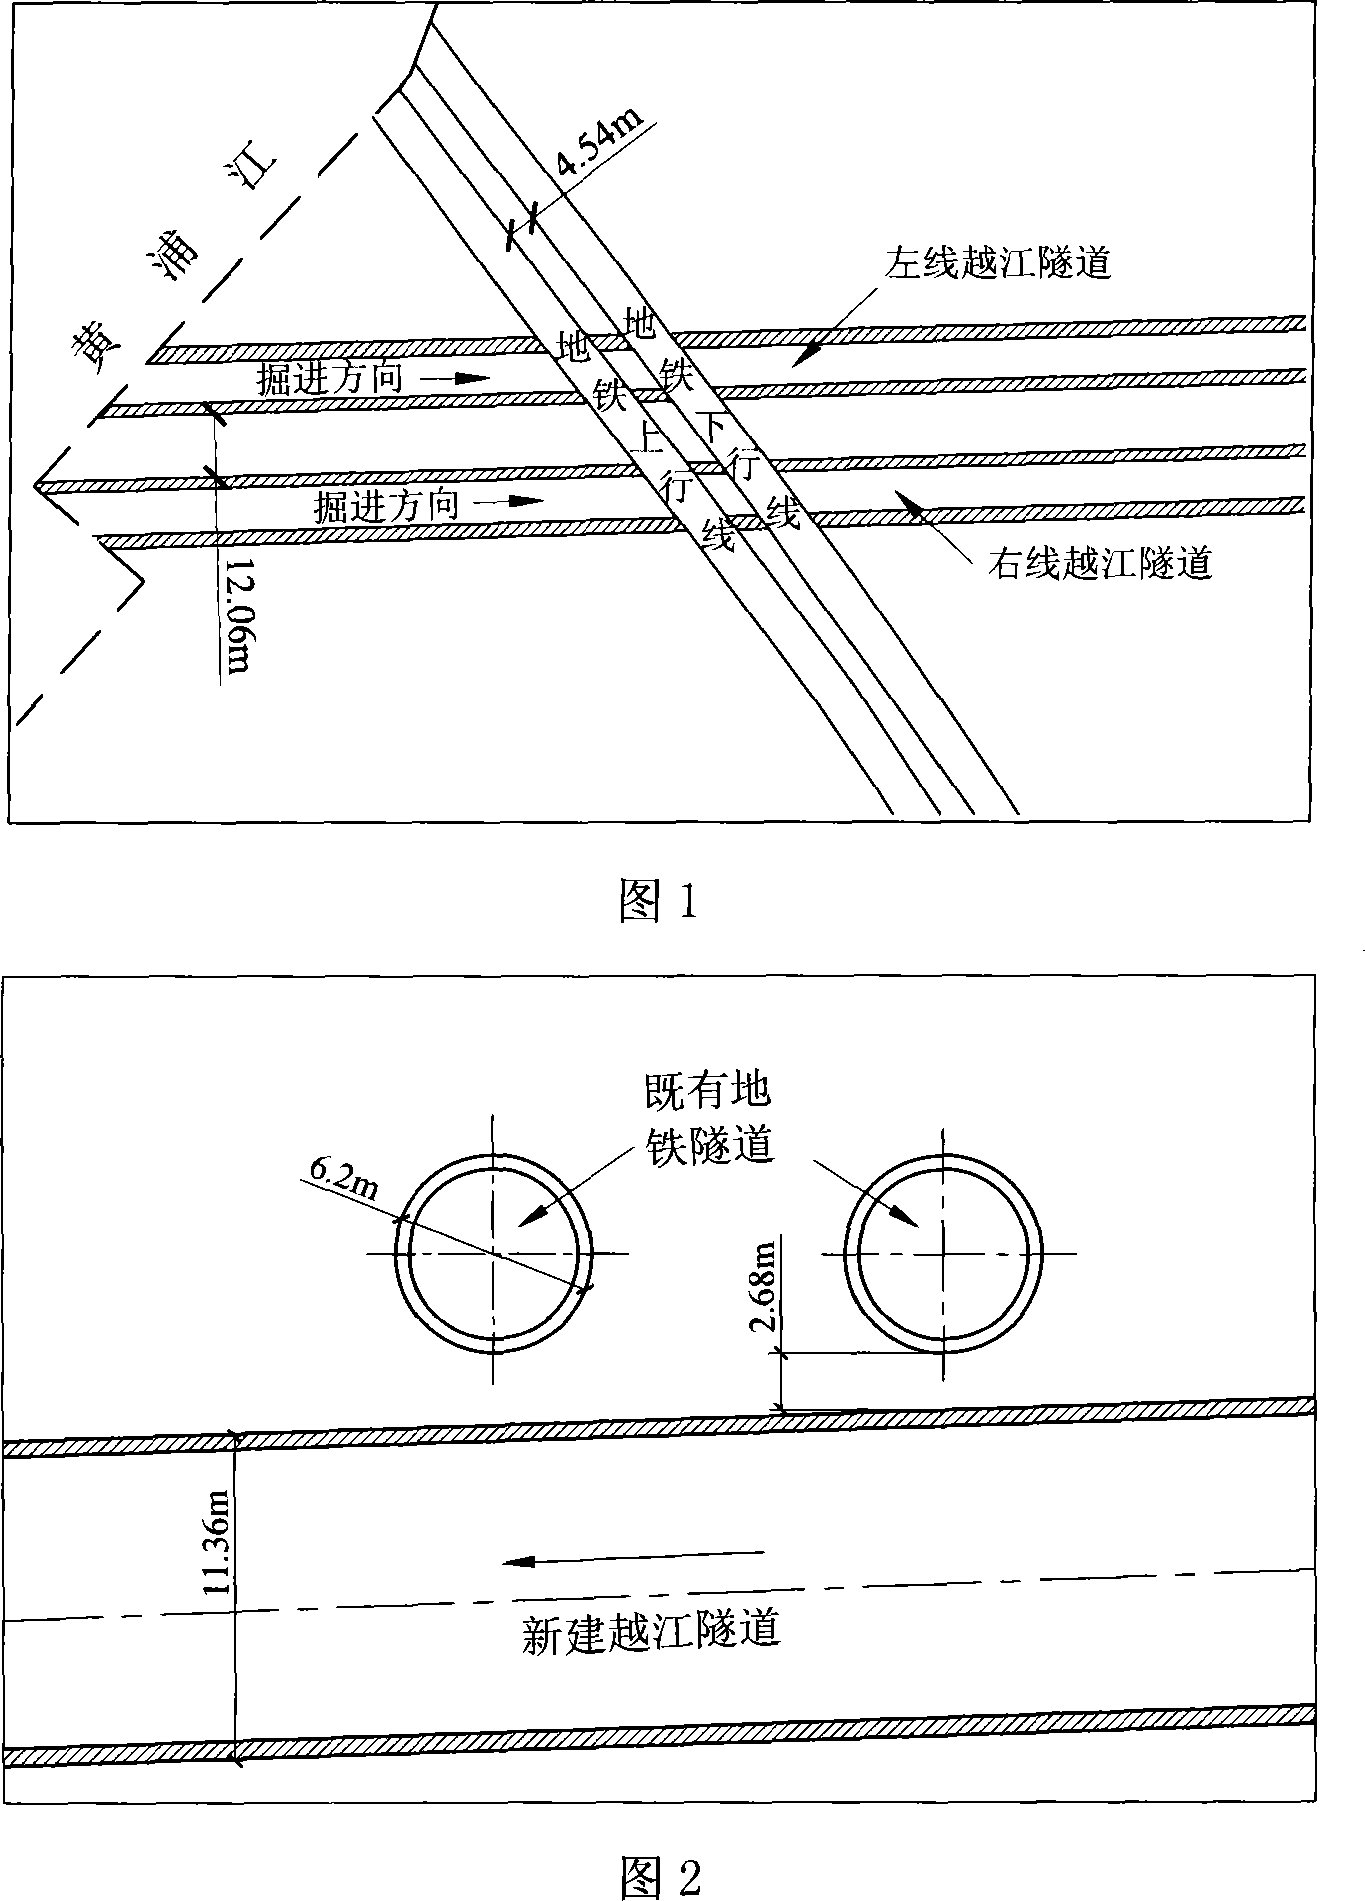 Large diameter tunneling close range down-traversing small diameter subway tunnel distortion control method